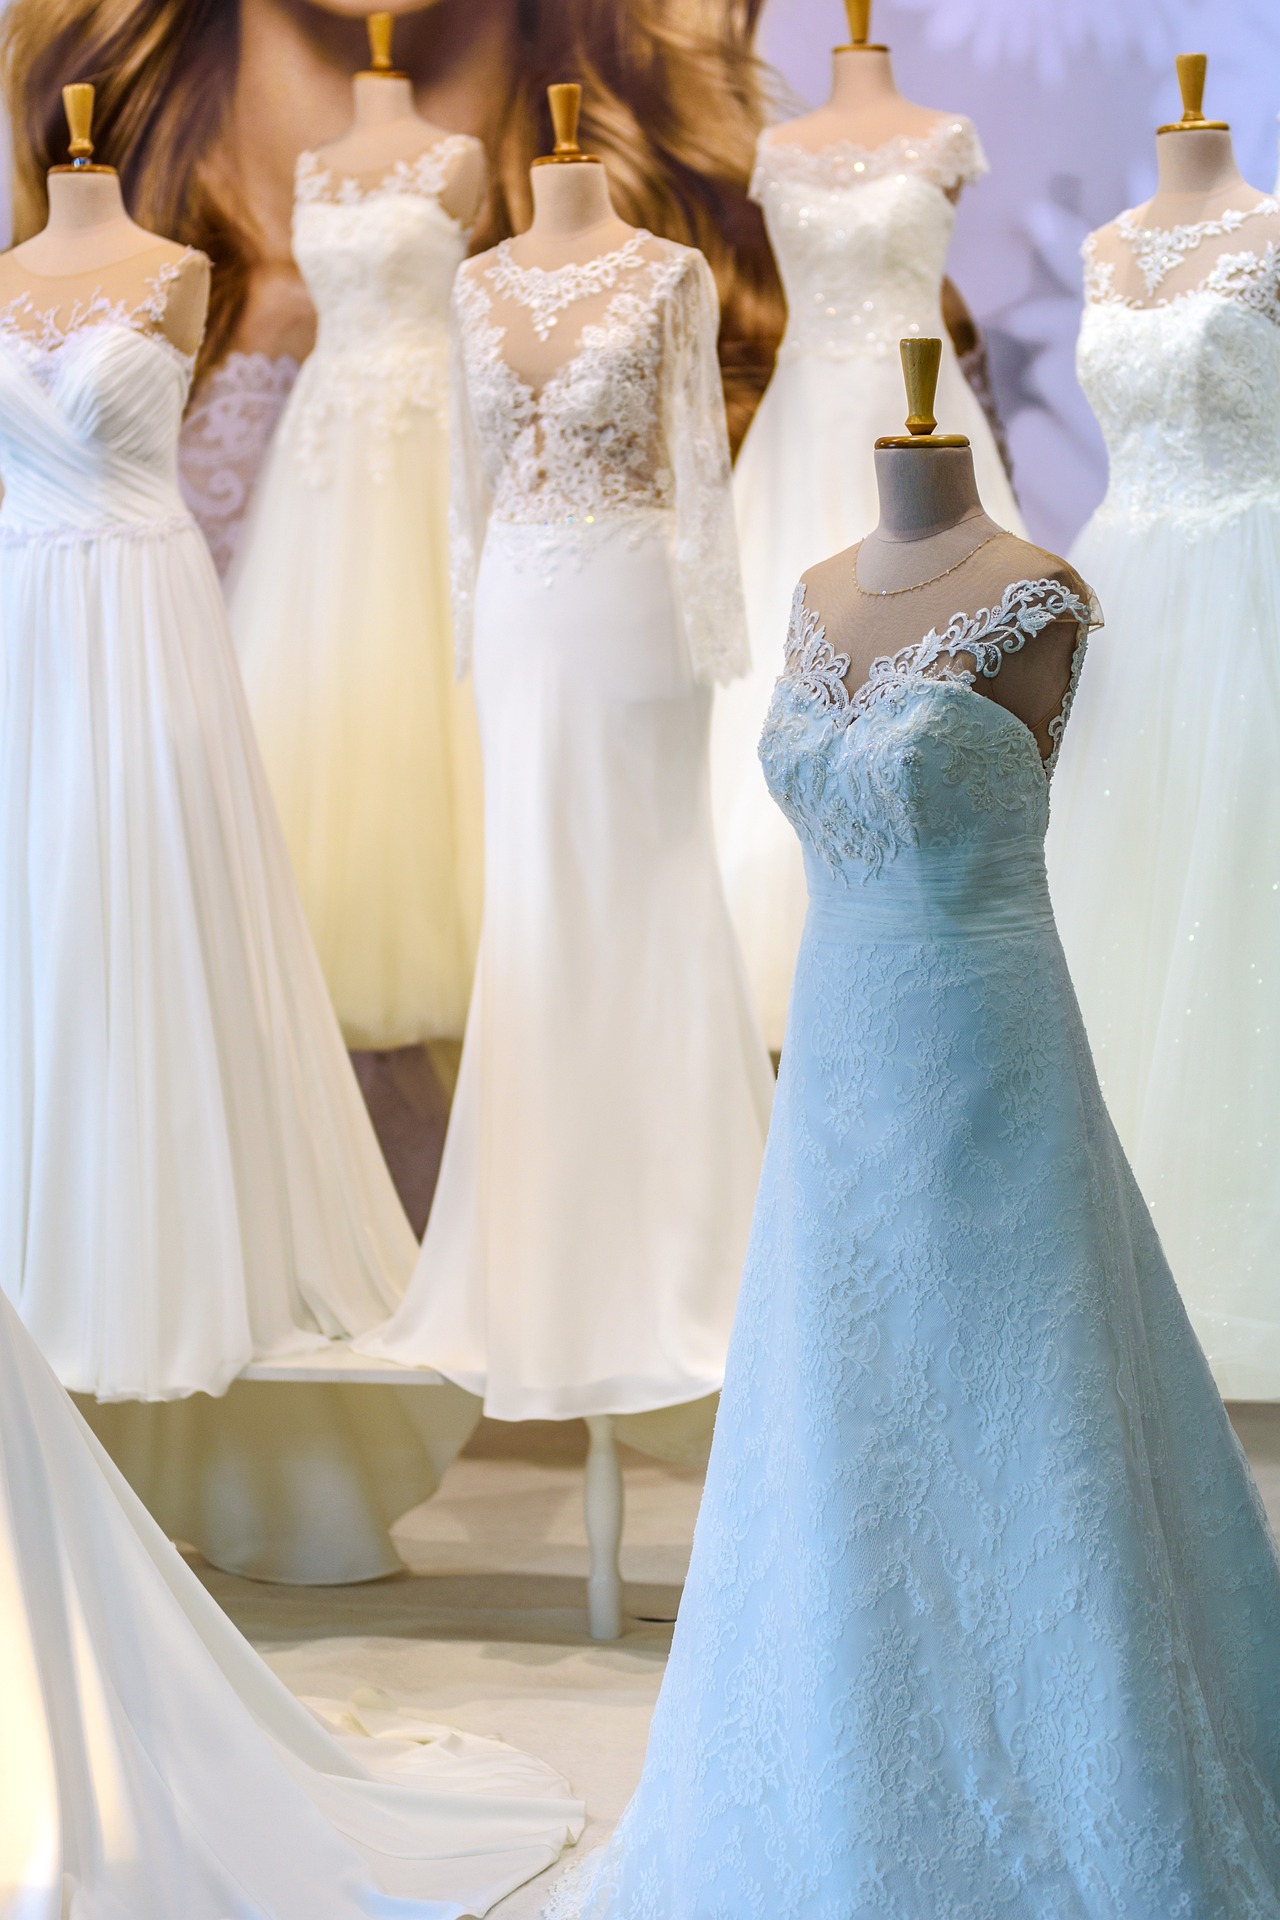 bridesmaids dress shopping etiquette wedding